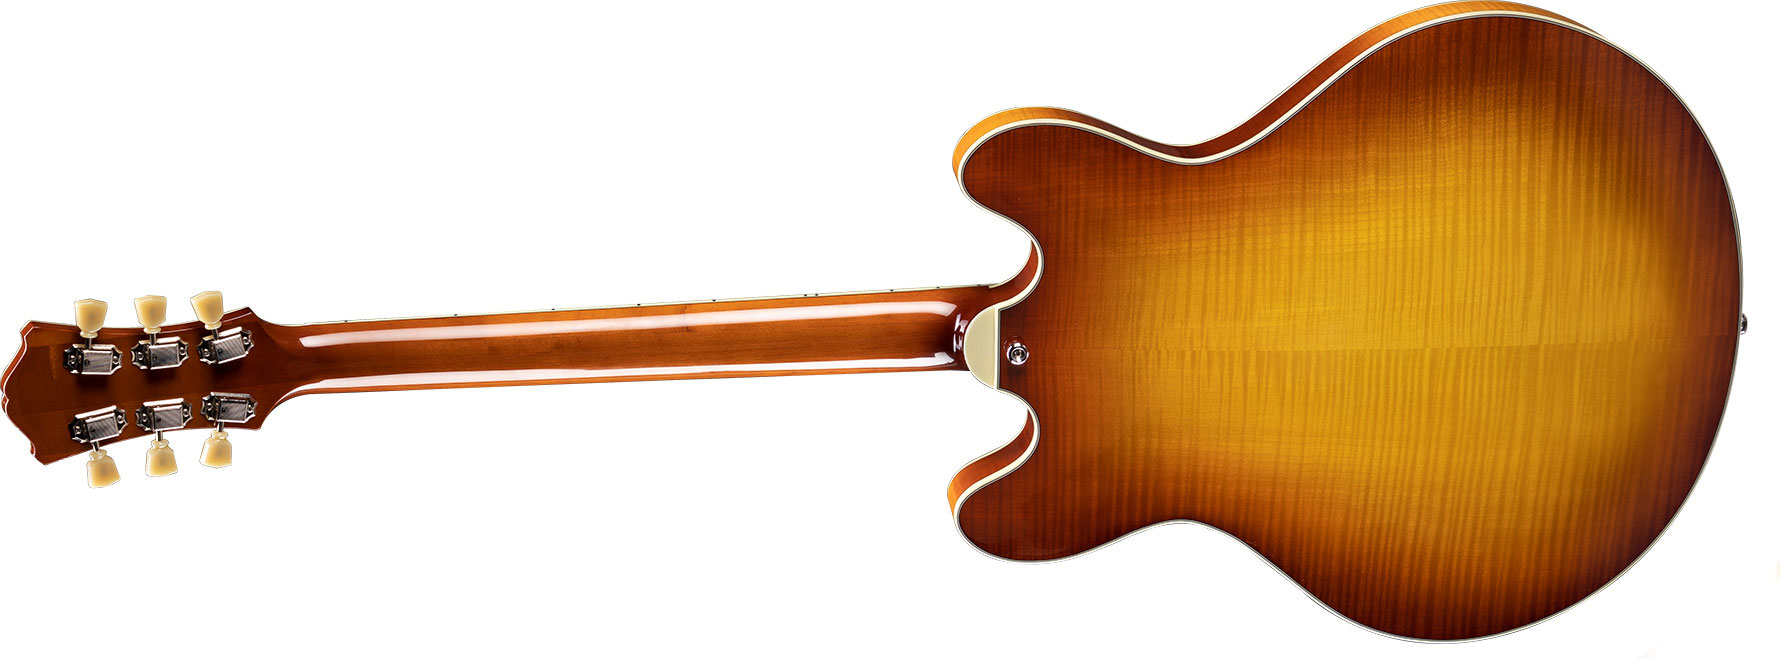 Eastman T486 Thinline Laminate Tout Erable Hh Seymour Duncan Ht Eb - Goldburst - Semi-hollow electric guitar - Variation 1